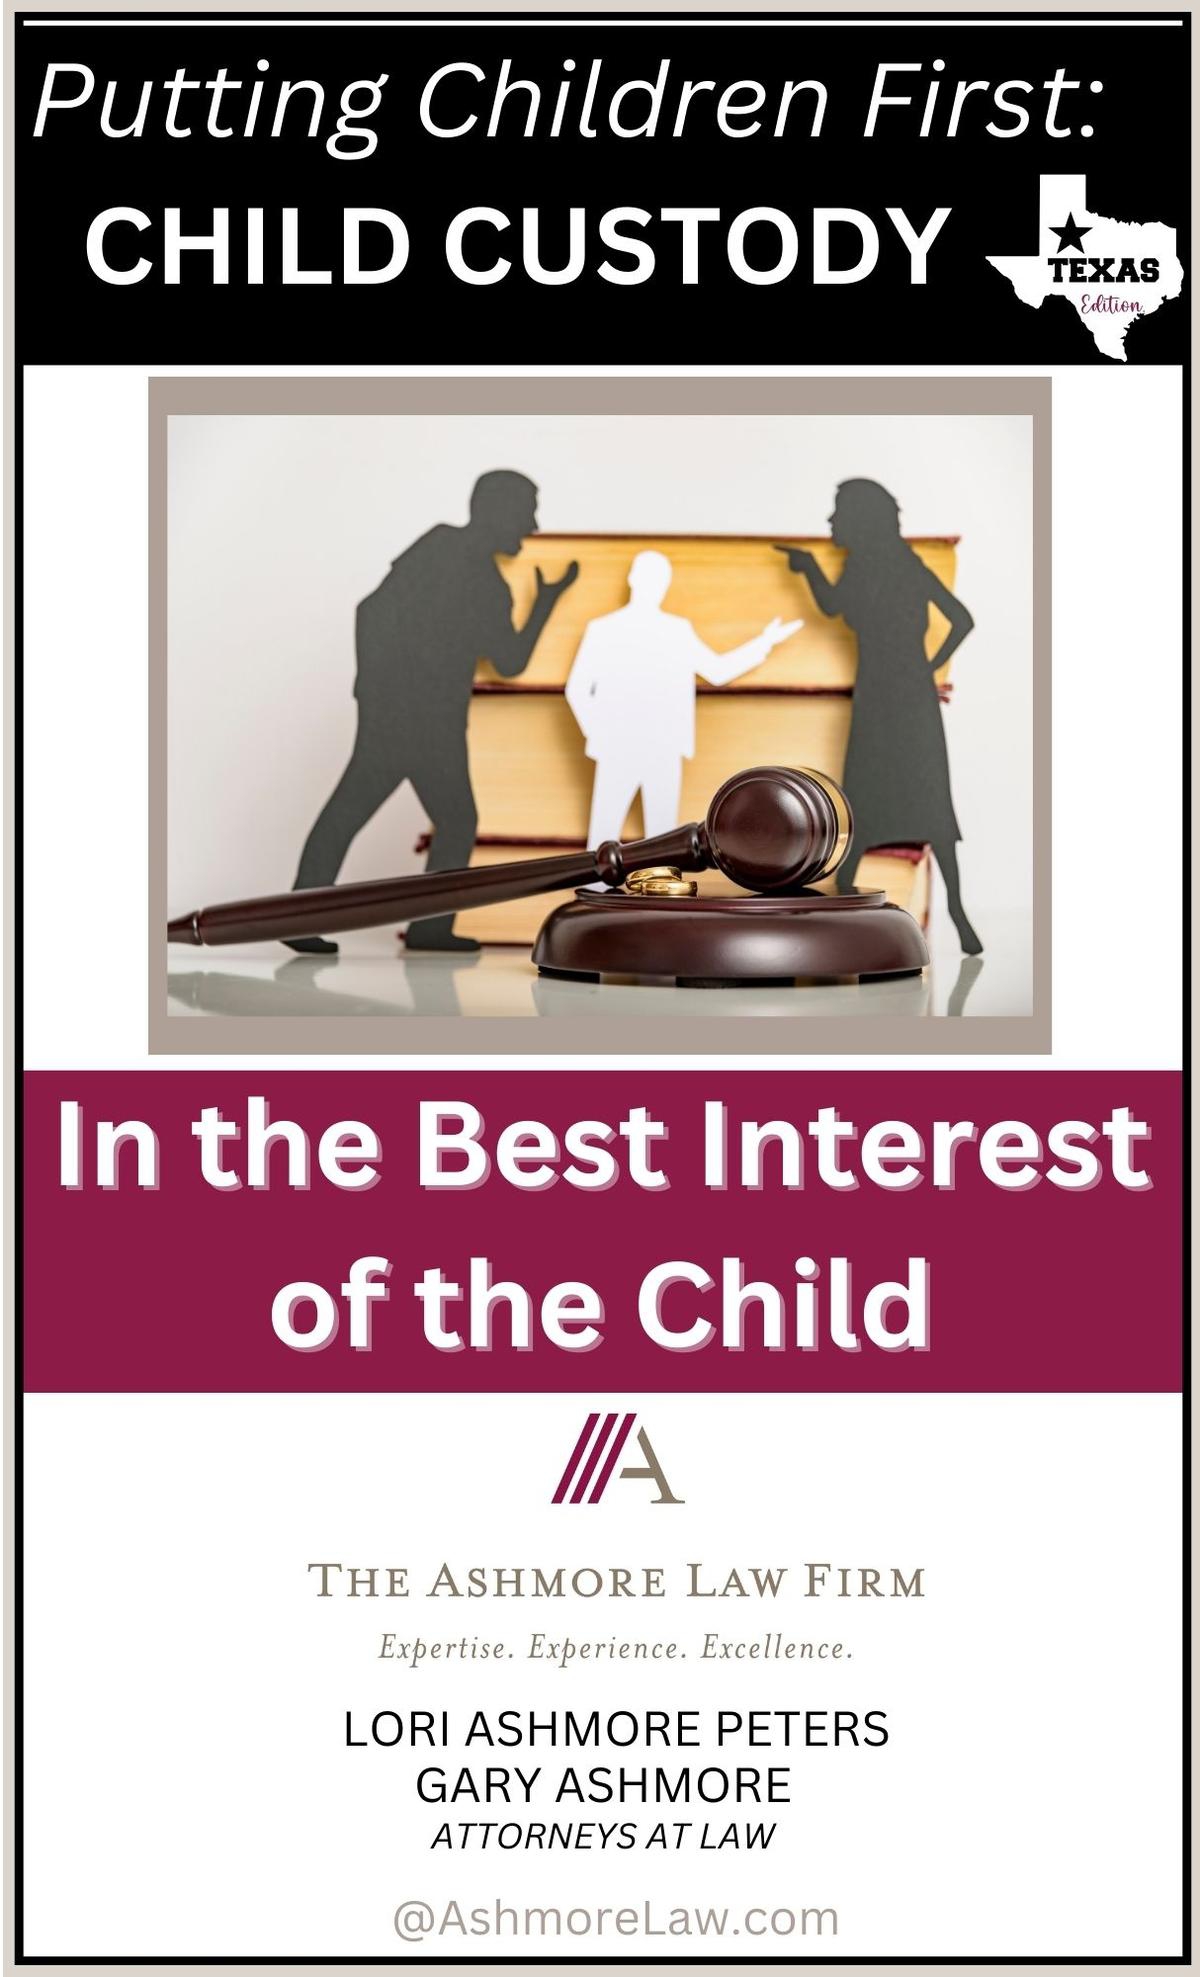 The Best Interest Of The Child: Child Custody |Dallas Child Custody Attorney | Highland Park TX Custody Attorney